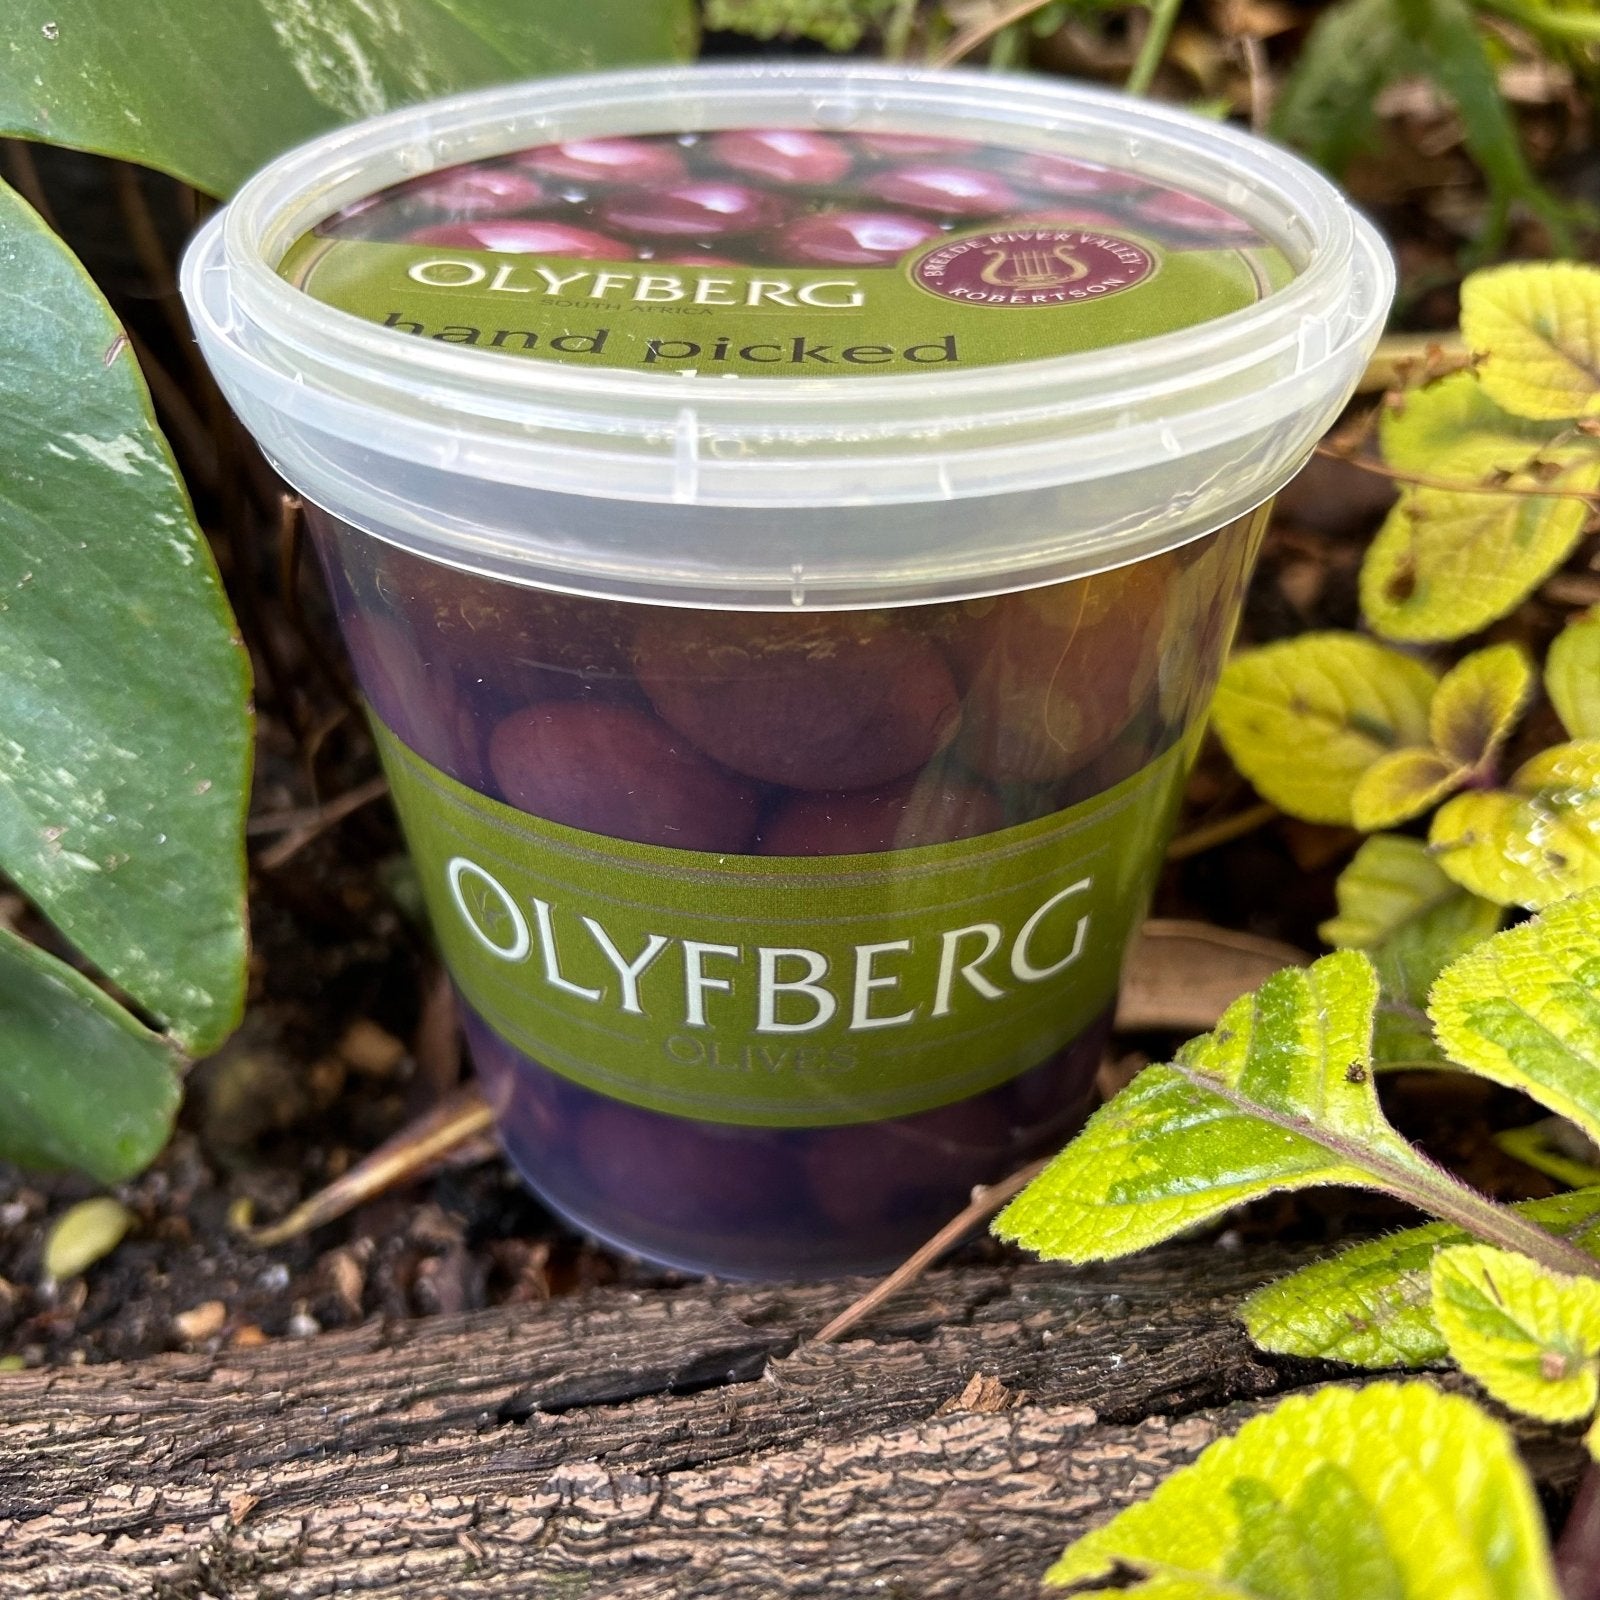 Olyfberg Black Olives (300g) - The Deli